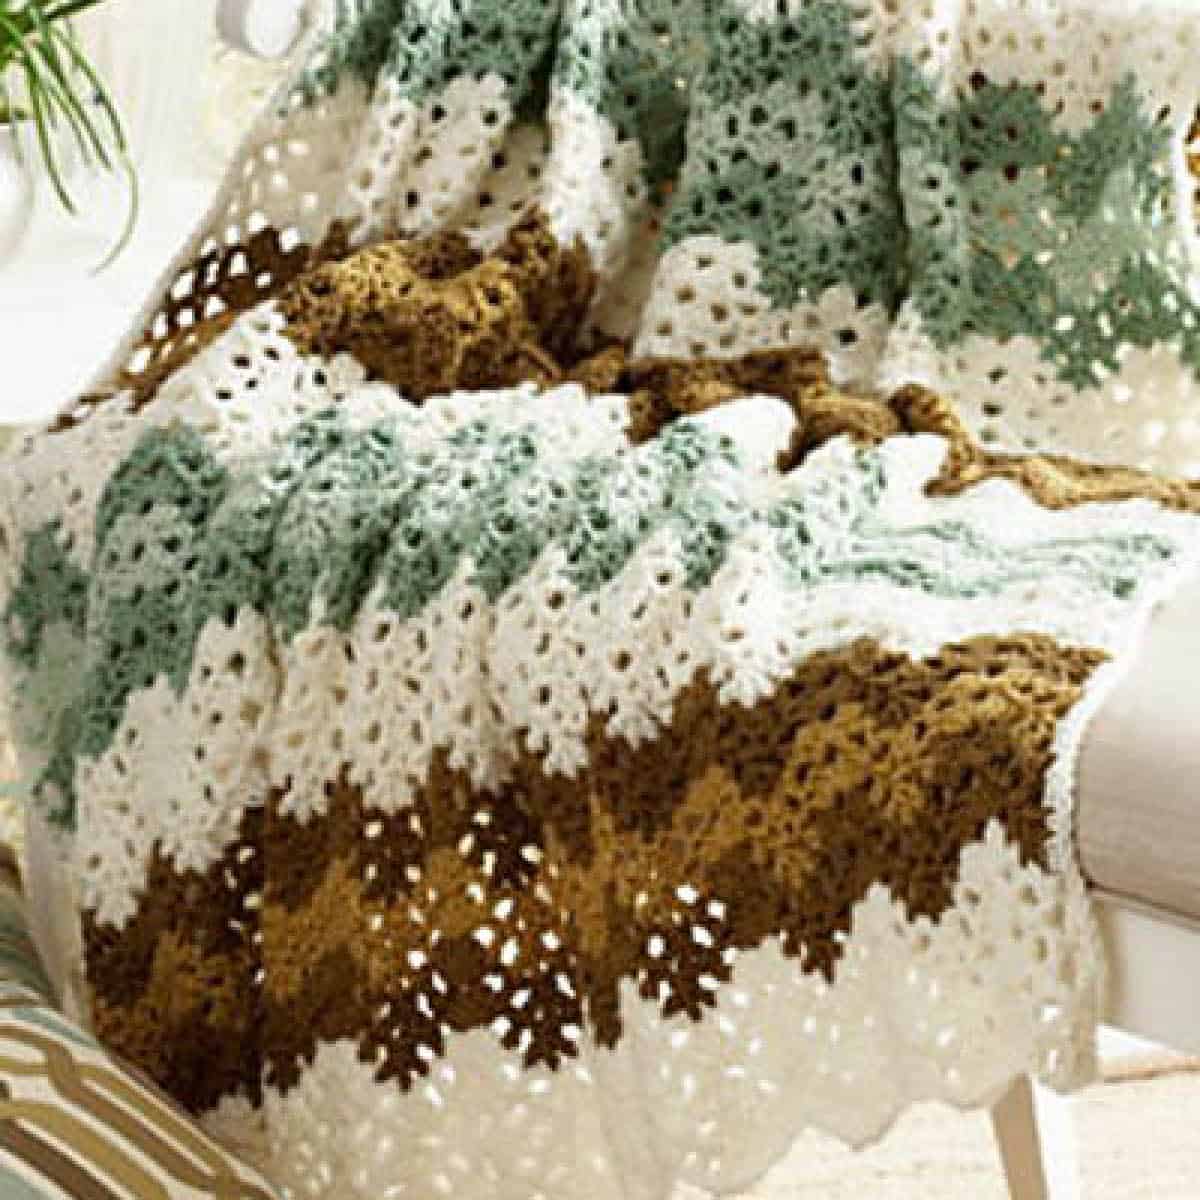 Bernat Study Of Puff Dessert Crochet Blanket Pattern